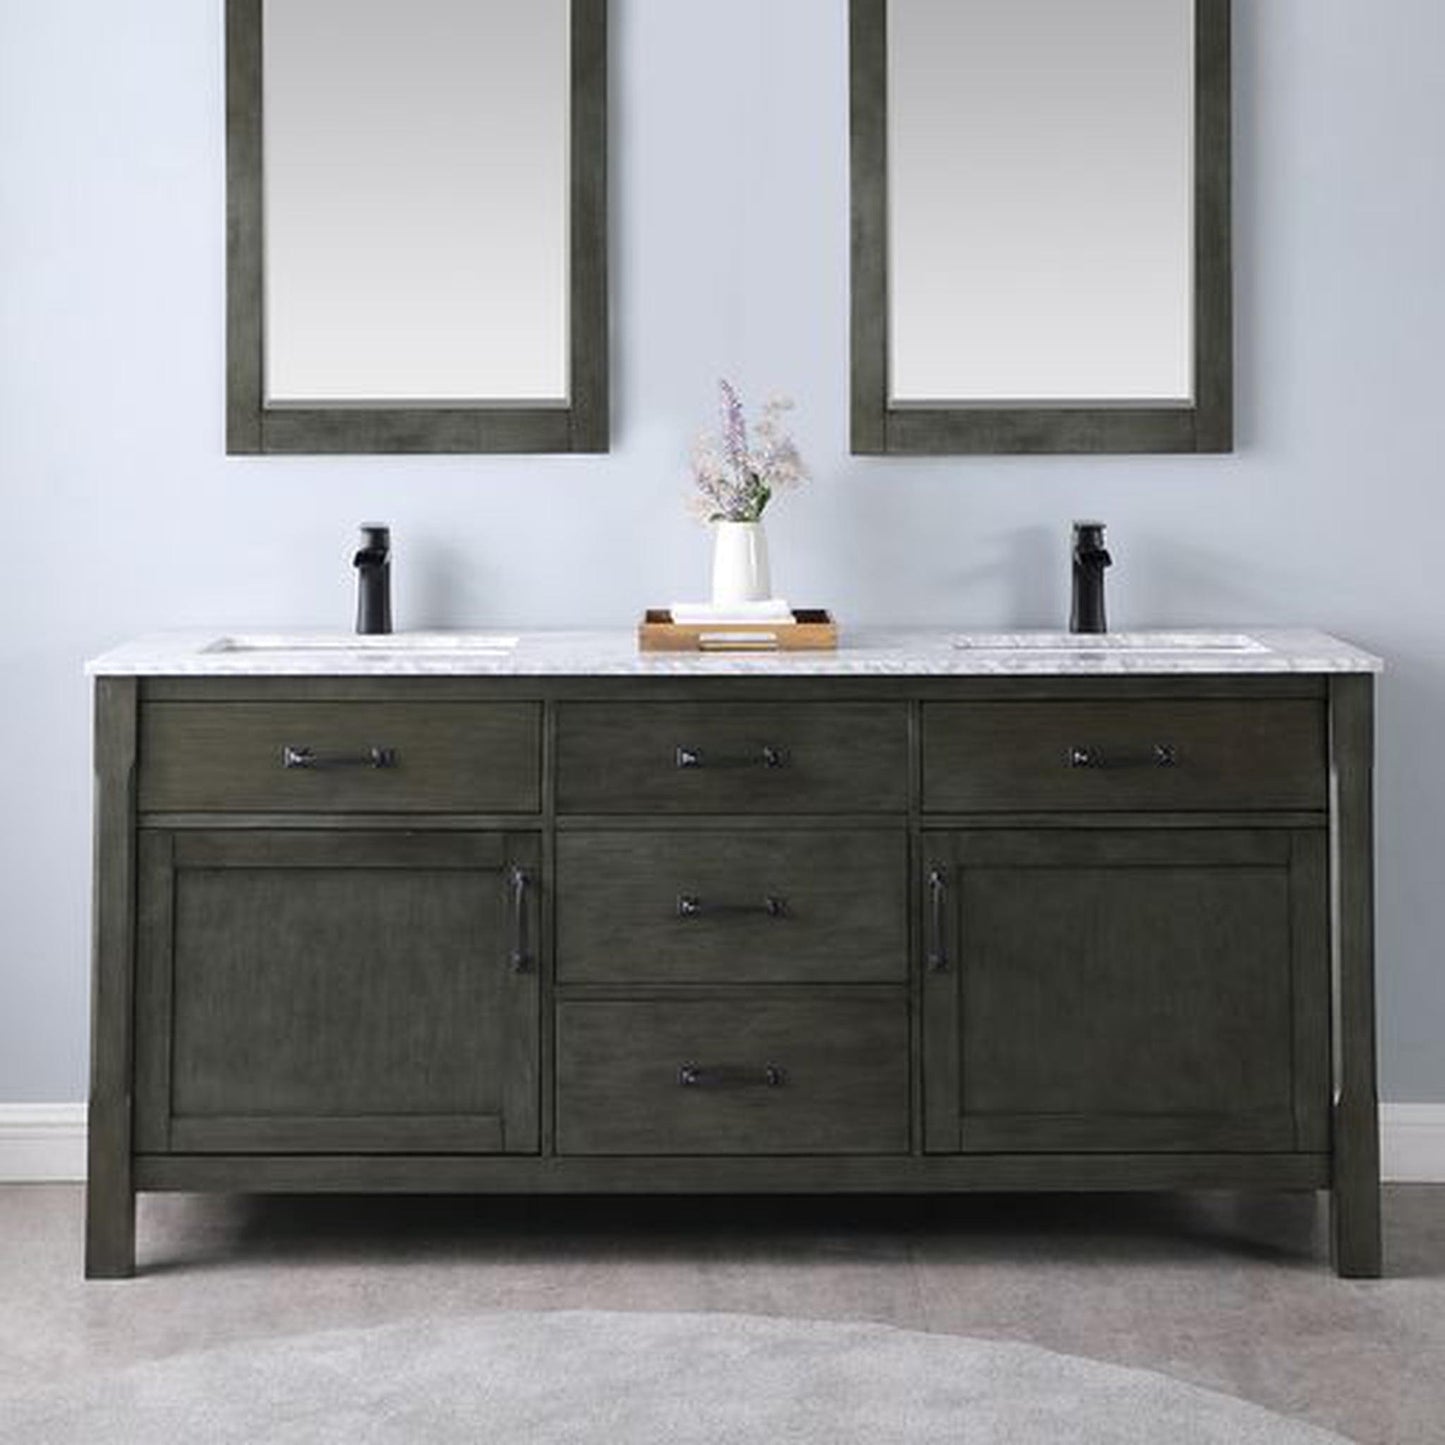 Altair Maribella 72" Double Rust Black Freestanding Bathroom Vanity Set With Natural Carrara White Marble Top, Two Rectangular Undermount Ceramic Sinks, and Overflow